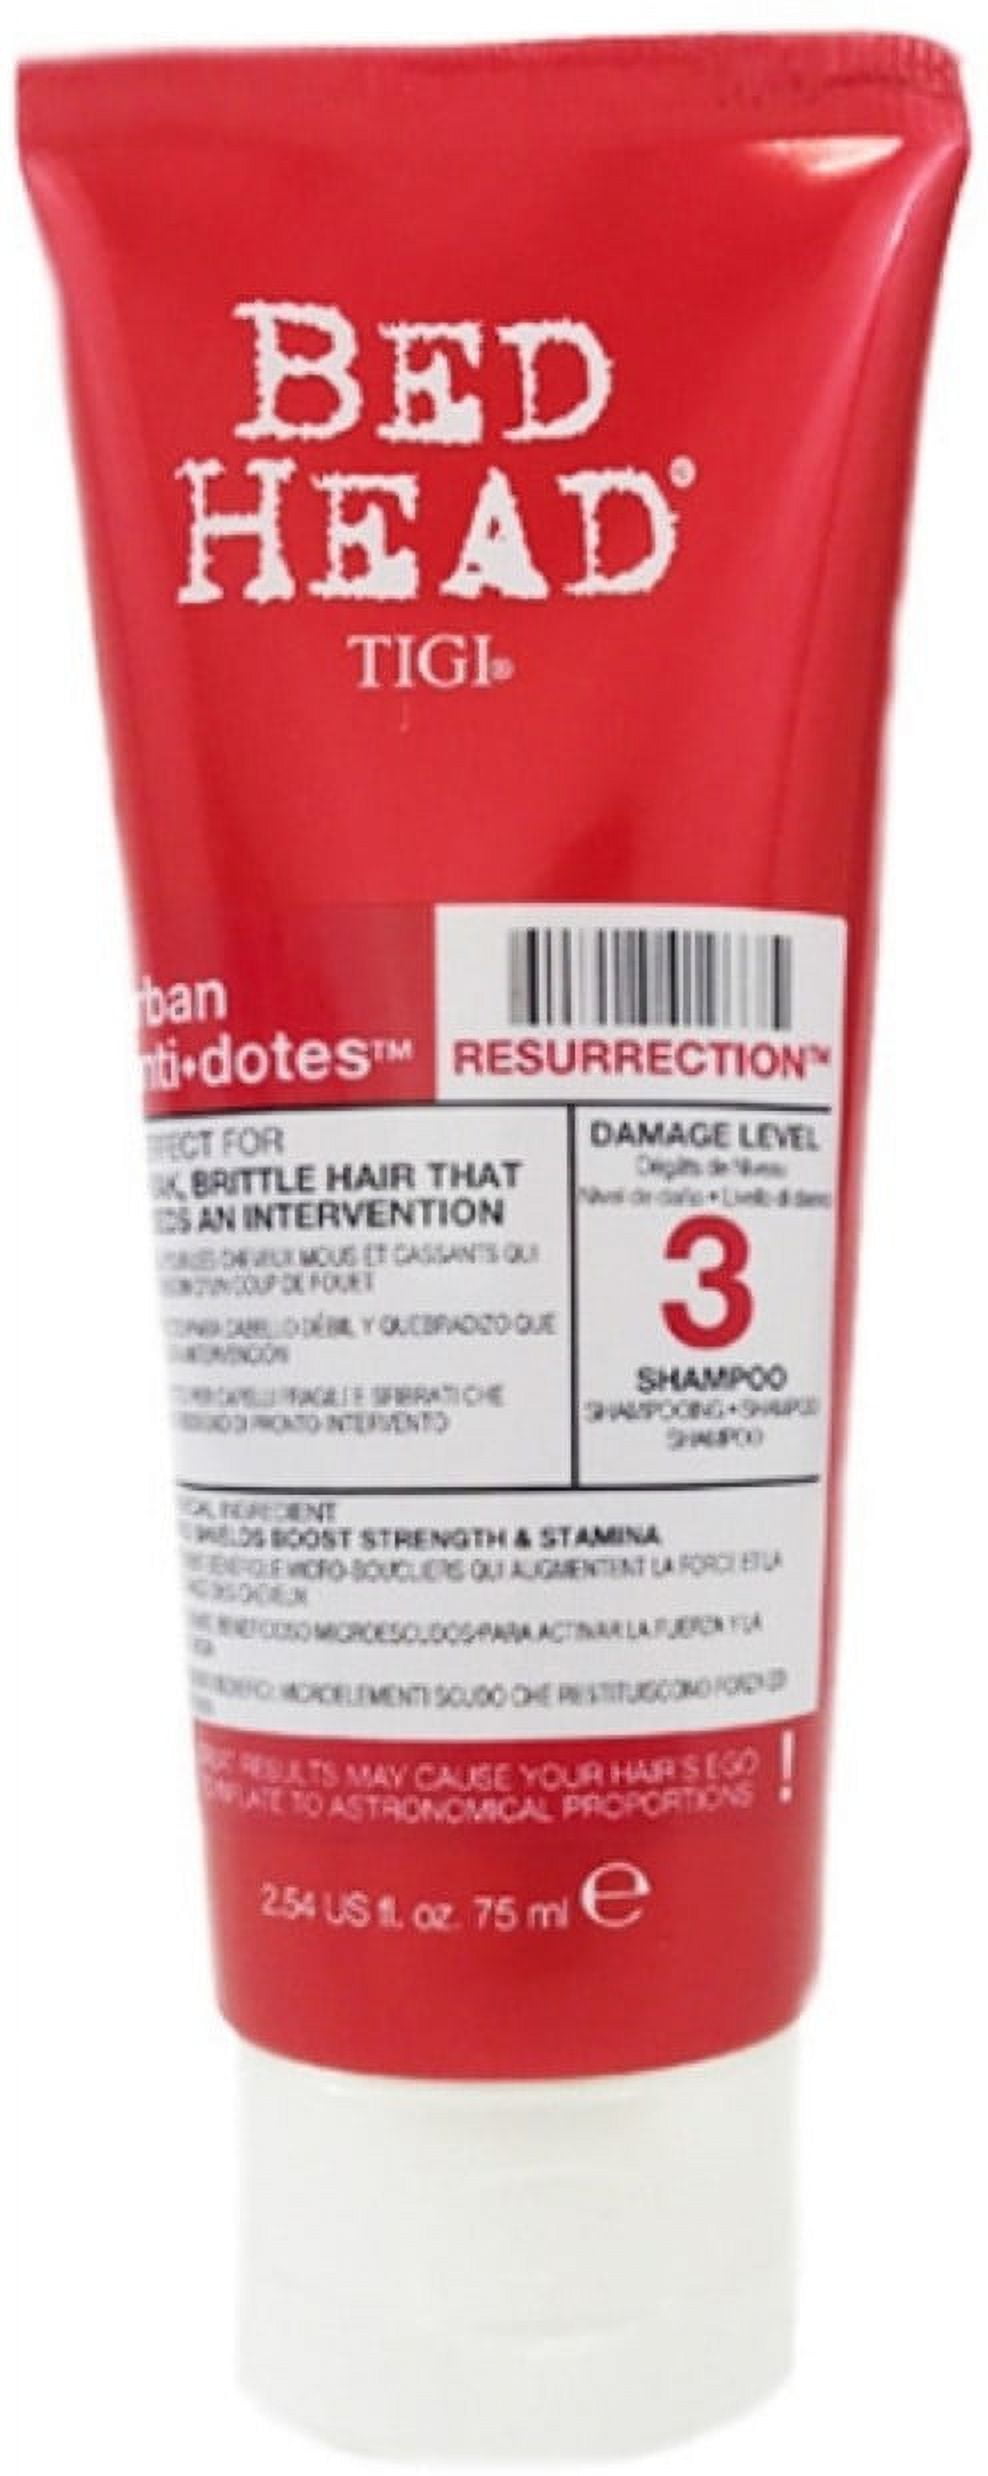 Tigi Bed Head Urban Anti Dotes Resurrection Shampoo Oz Pack Of